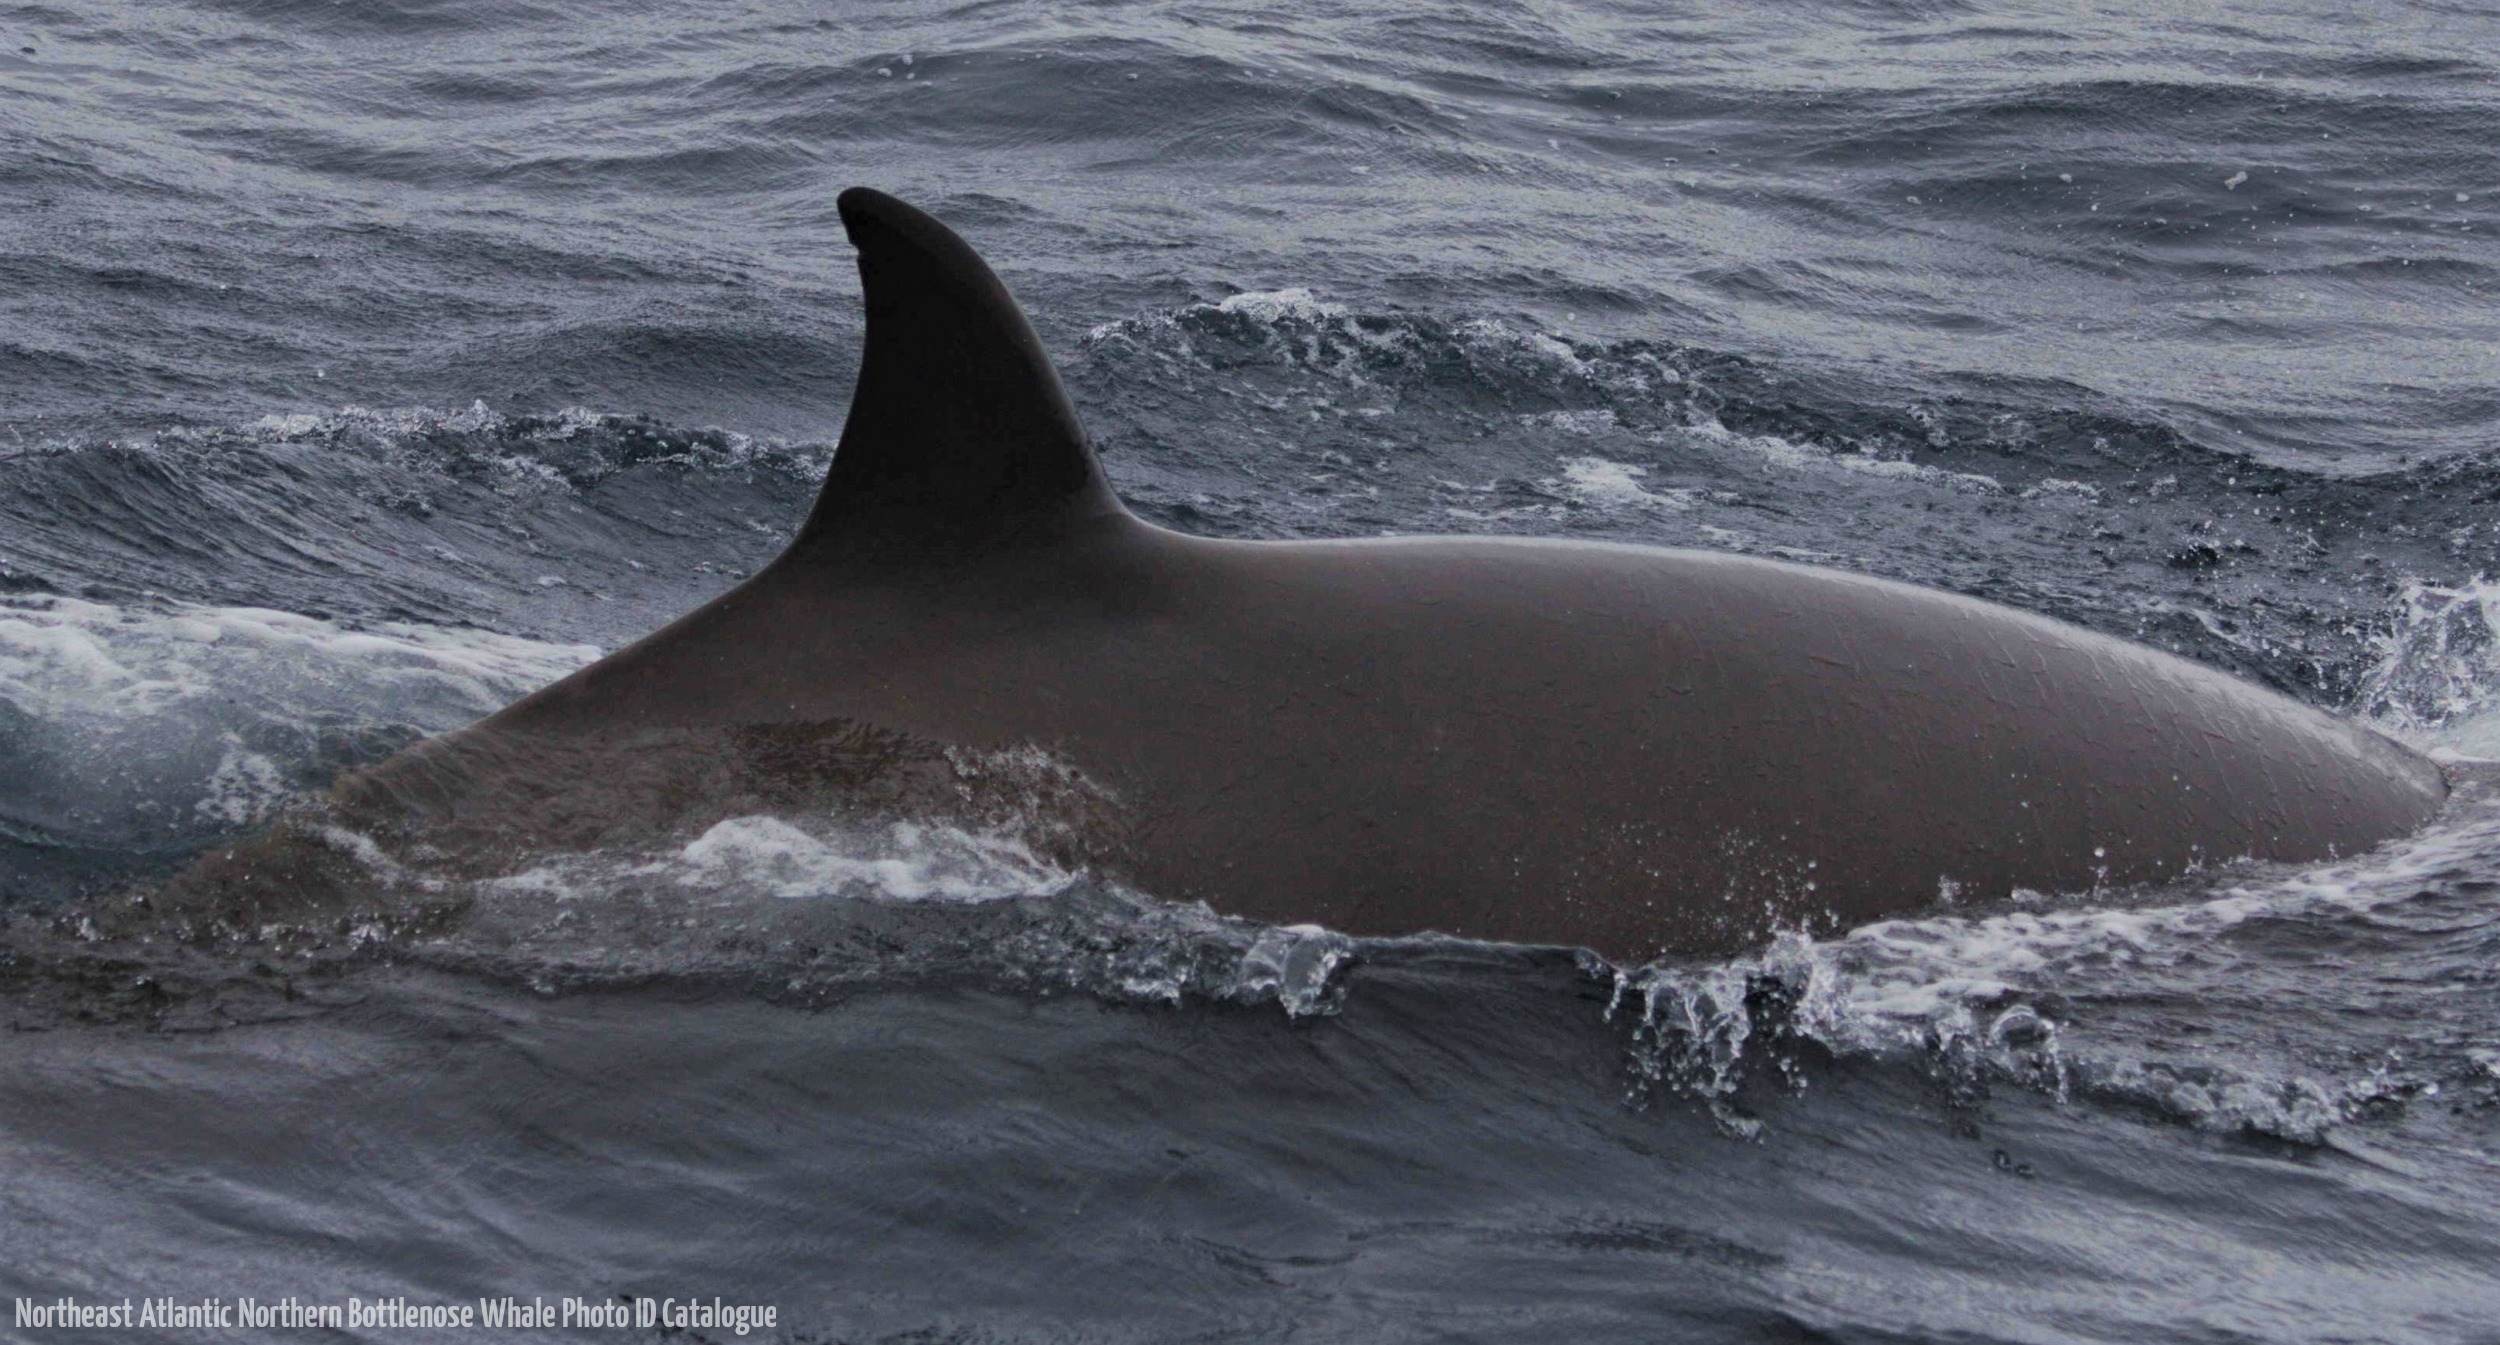 Whale ID: 0311,  Date taken: 24-06-2014,  Photographer: Lucia M. Martín López